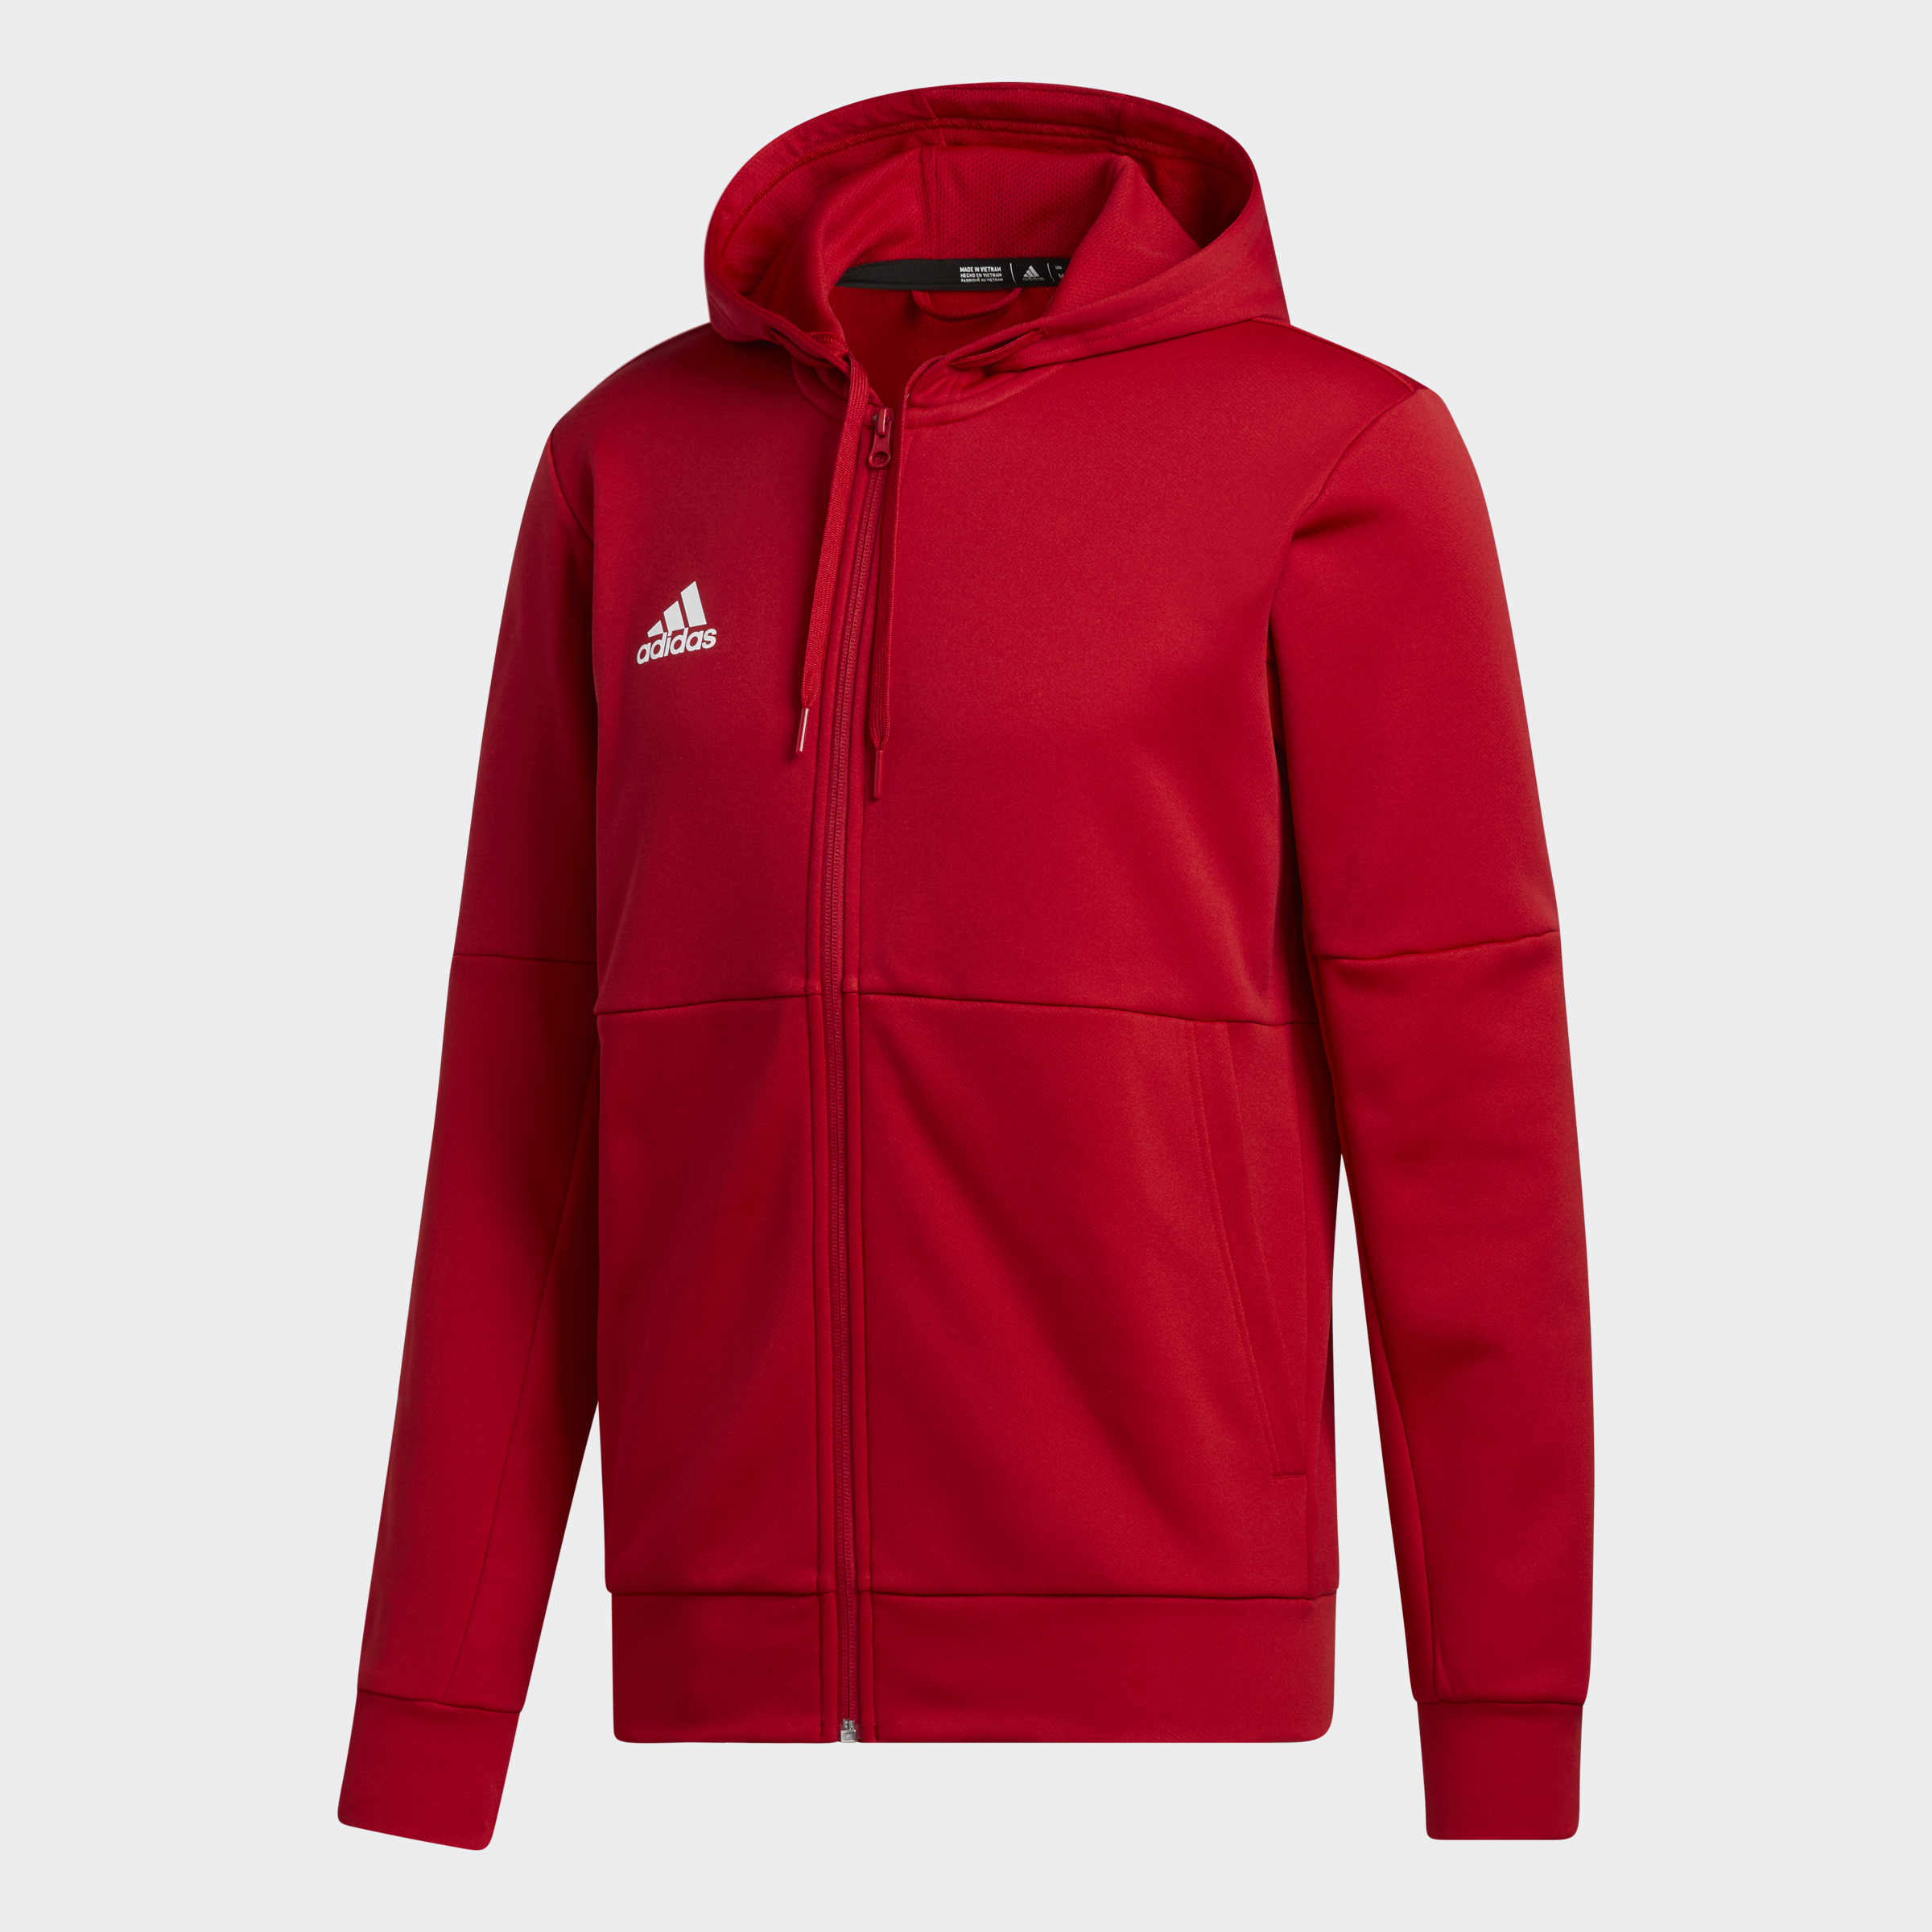 Адидас и ти. Jacket Red adidas sportive. Куртка adidas красная. Красная куртка адидас. FZ куртка.